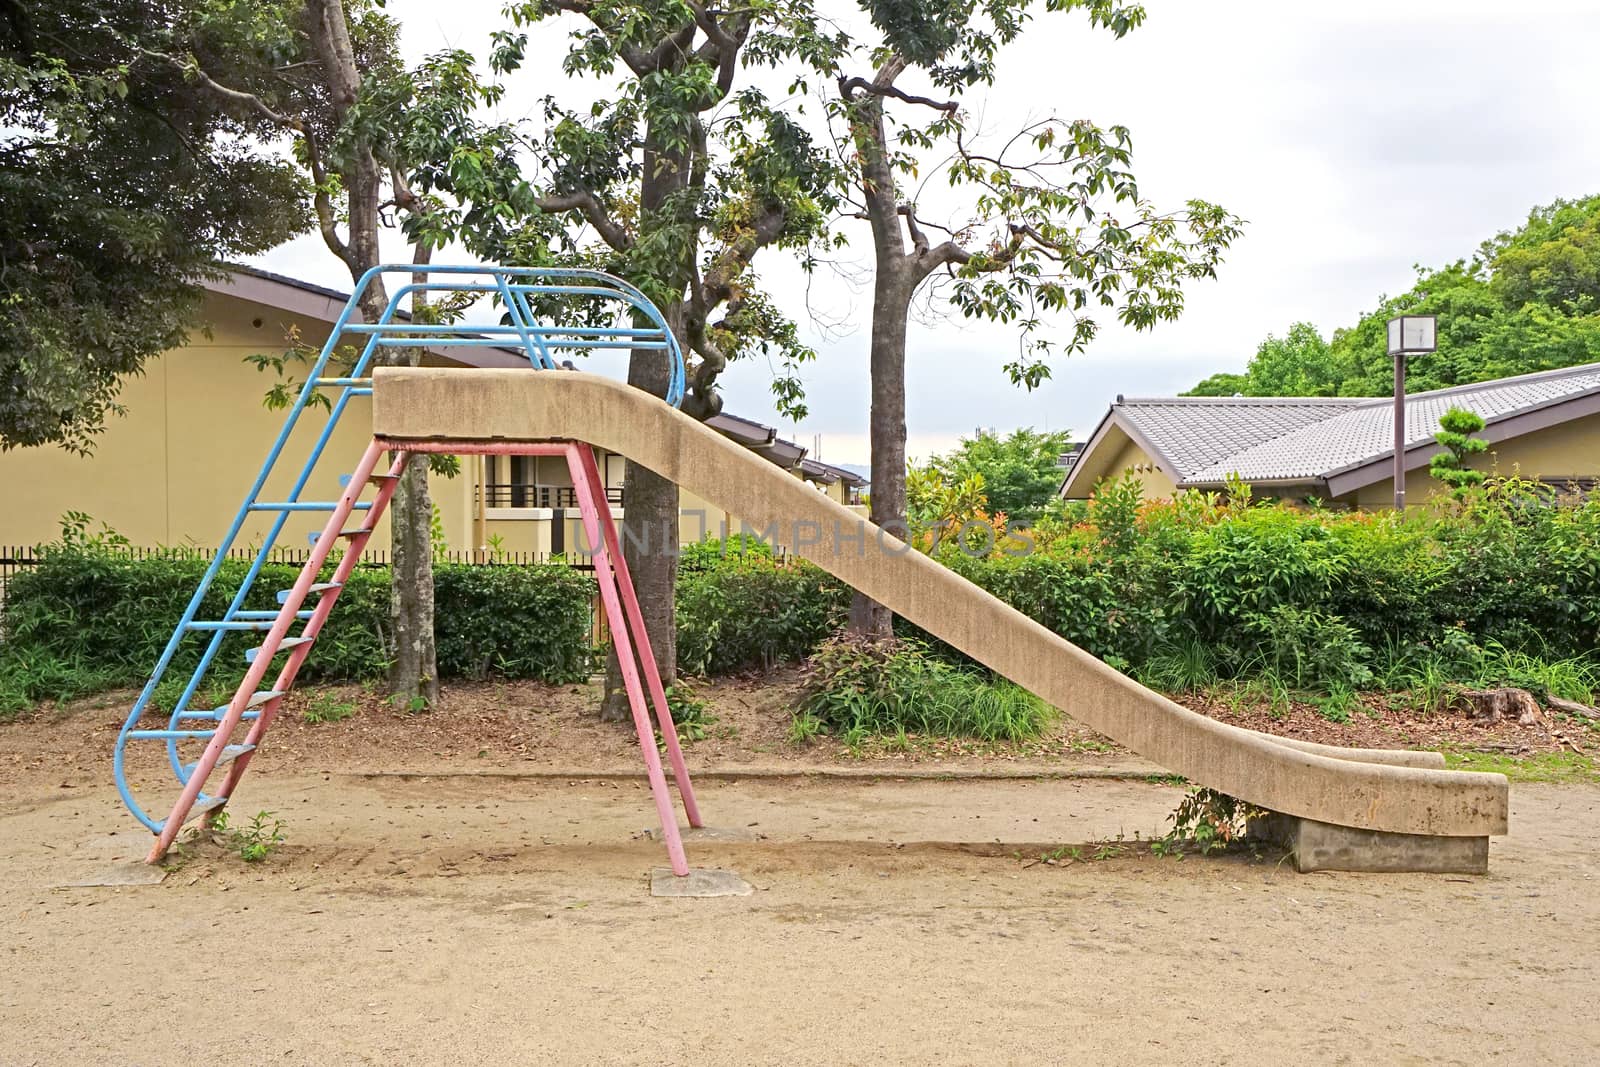 retro children slide equipment in Japan outdoor playround by cougarsan